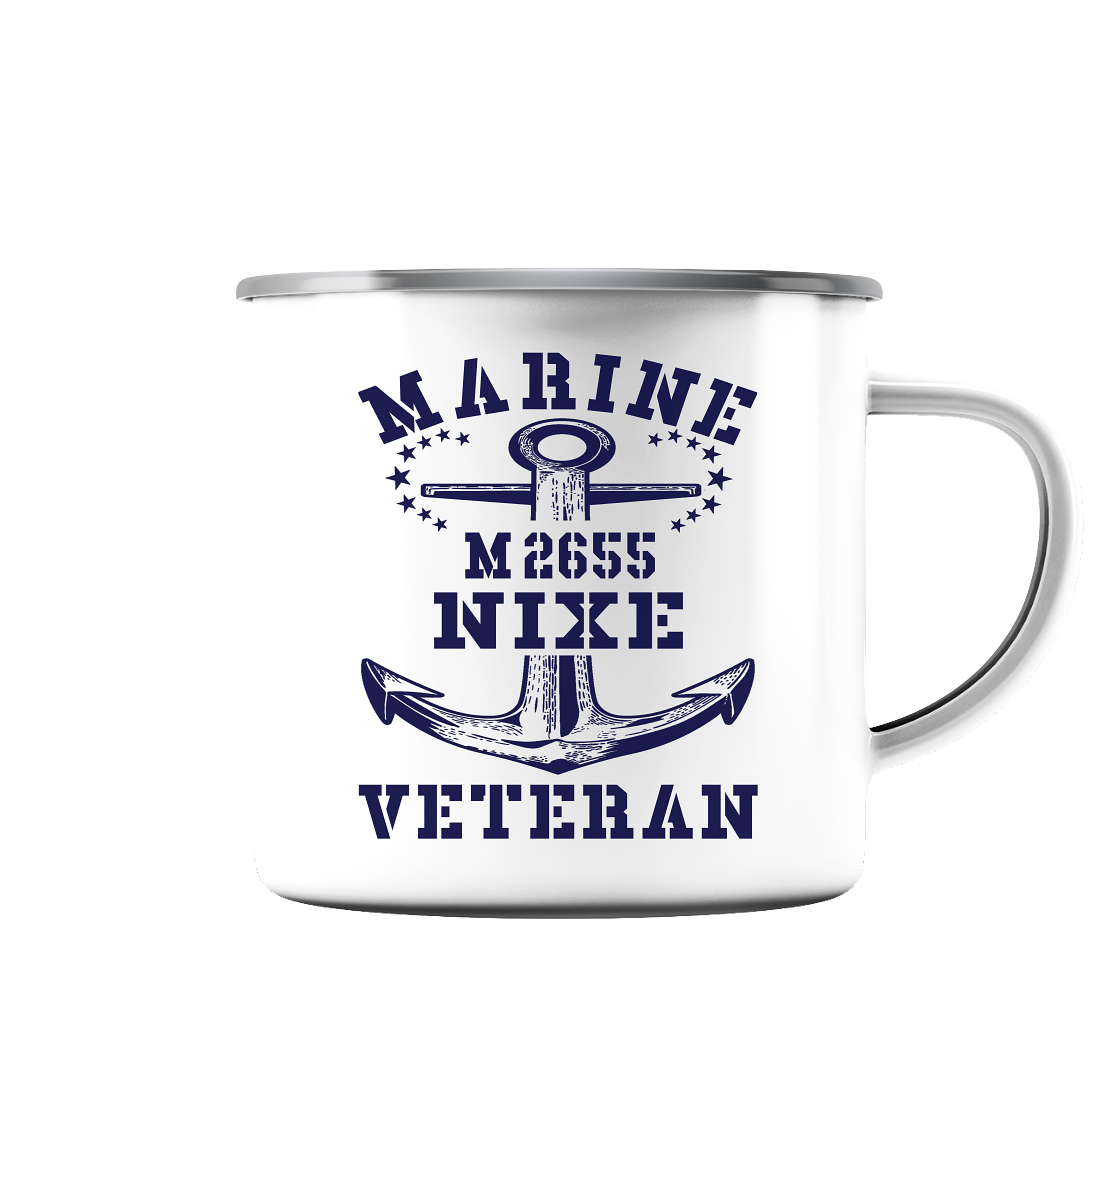 BiMi M2655 NIXE Marine Veteran - Emaille Tasse (Silber)